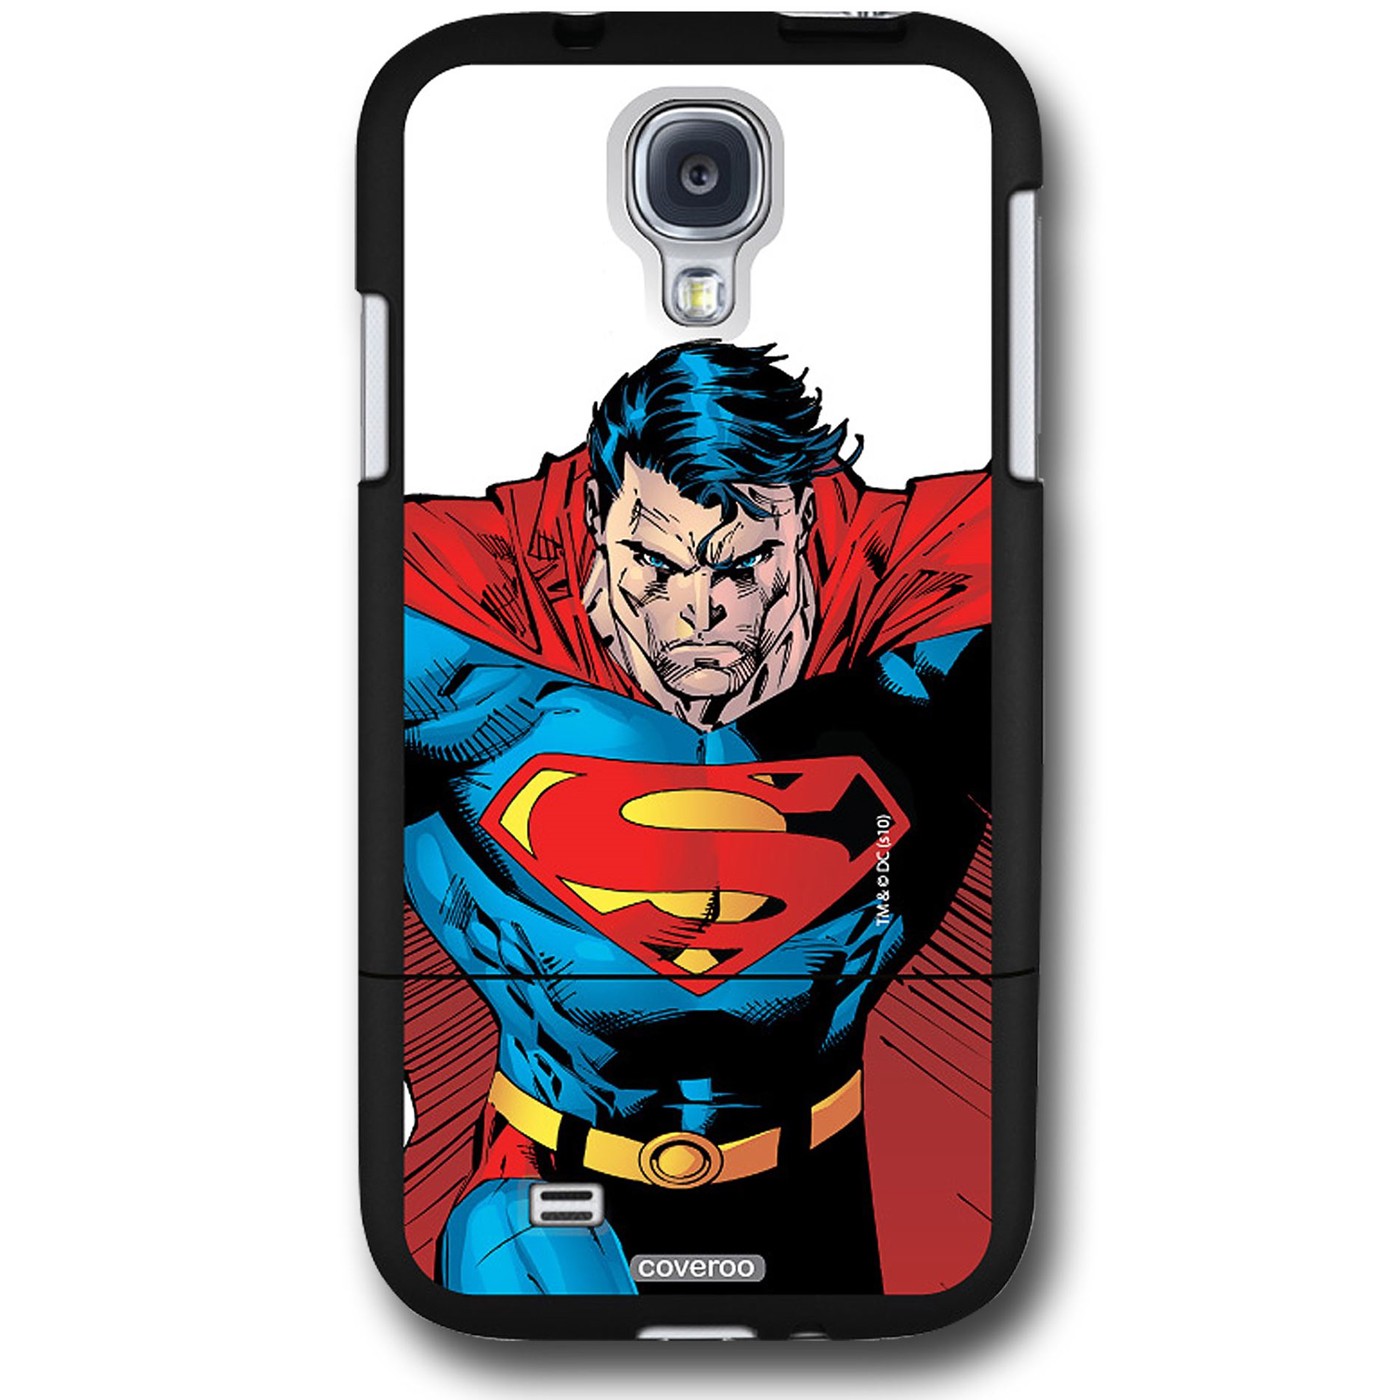 Superman Close-Up Galaxy S4 Slider Case